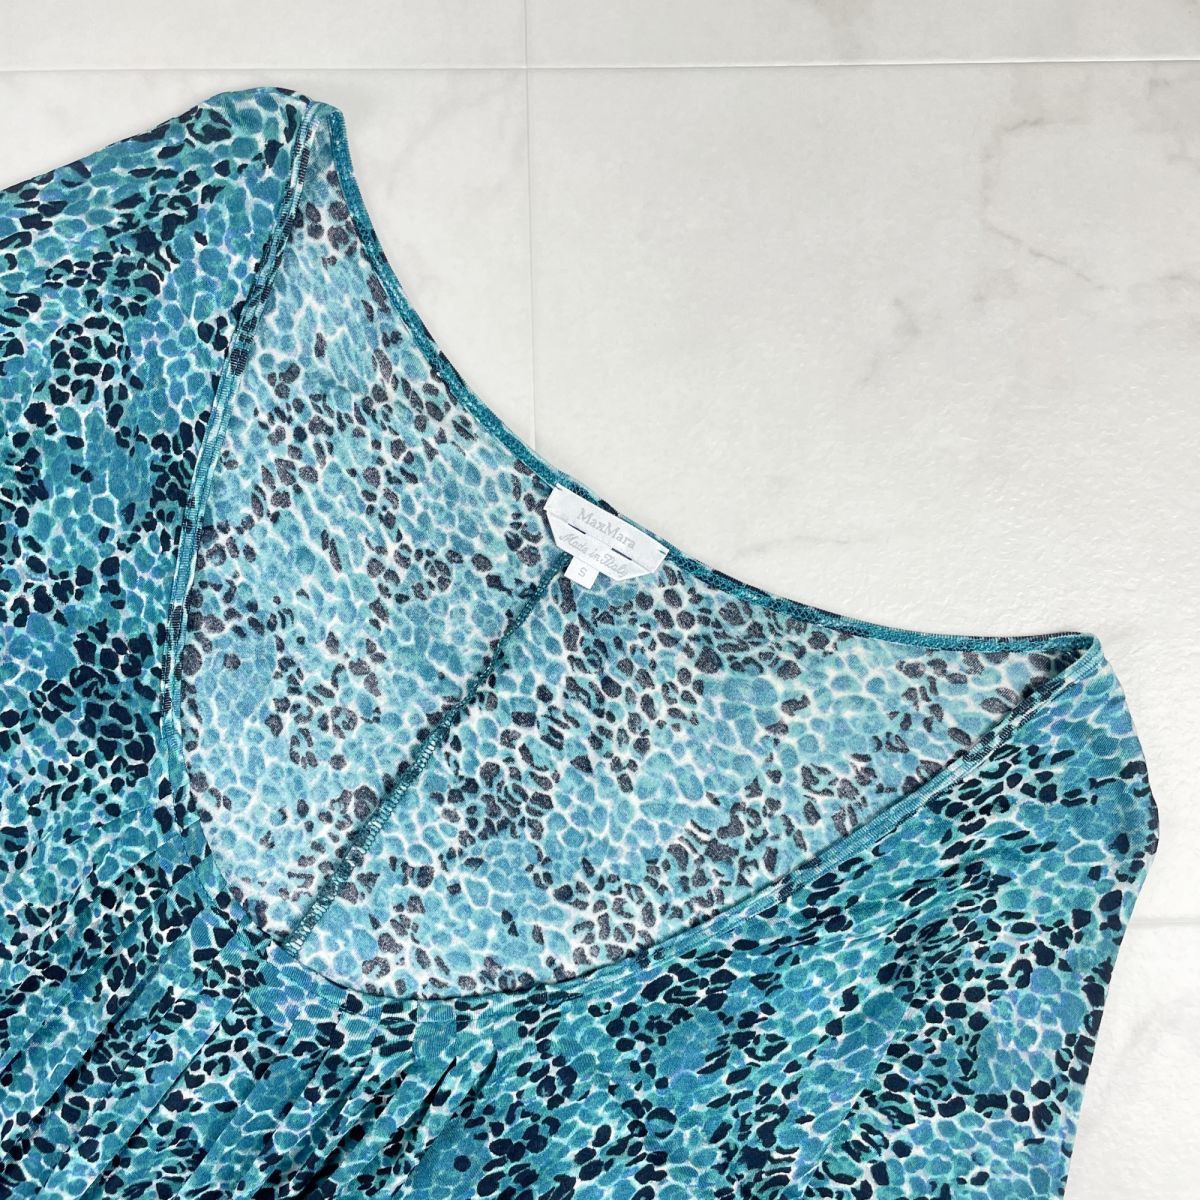  прекрасный товар Max Mara Max Mara общий рисунок широкий шея короткий рукав блуза cut and sewn стрейч tops женский синий голубой размер S*EC454